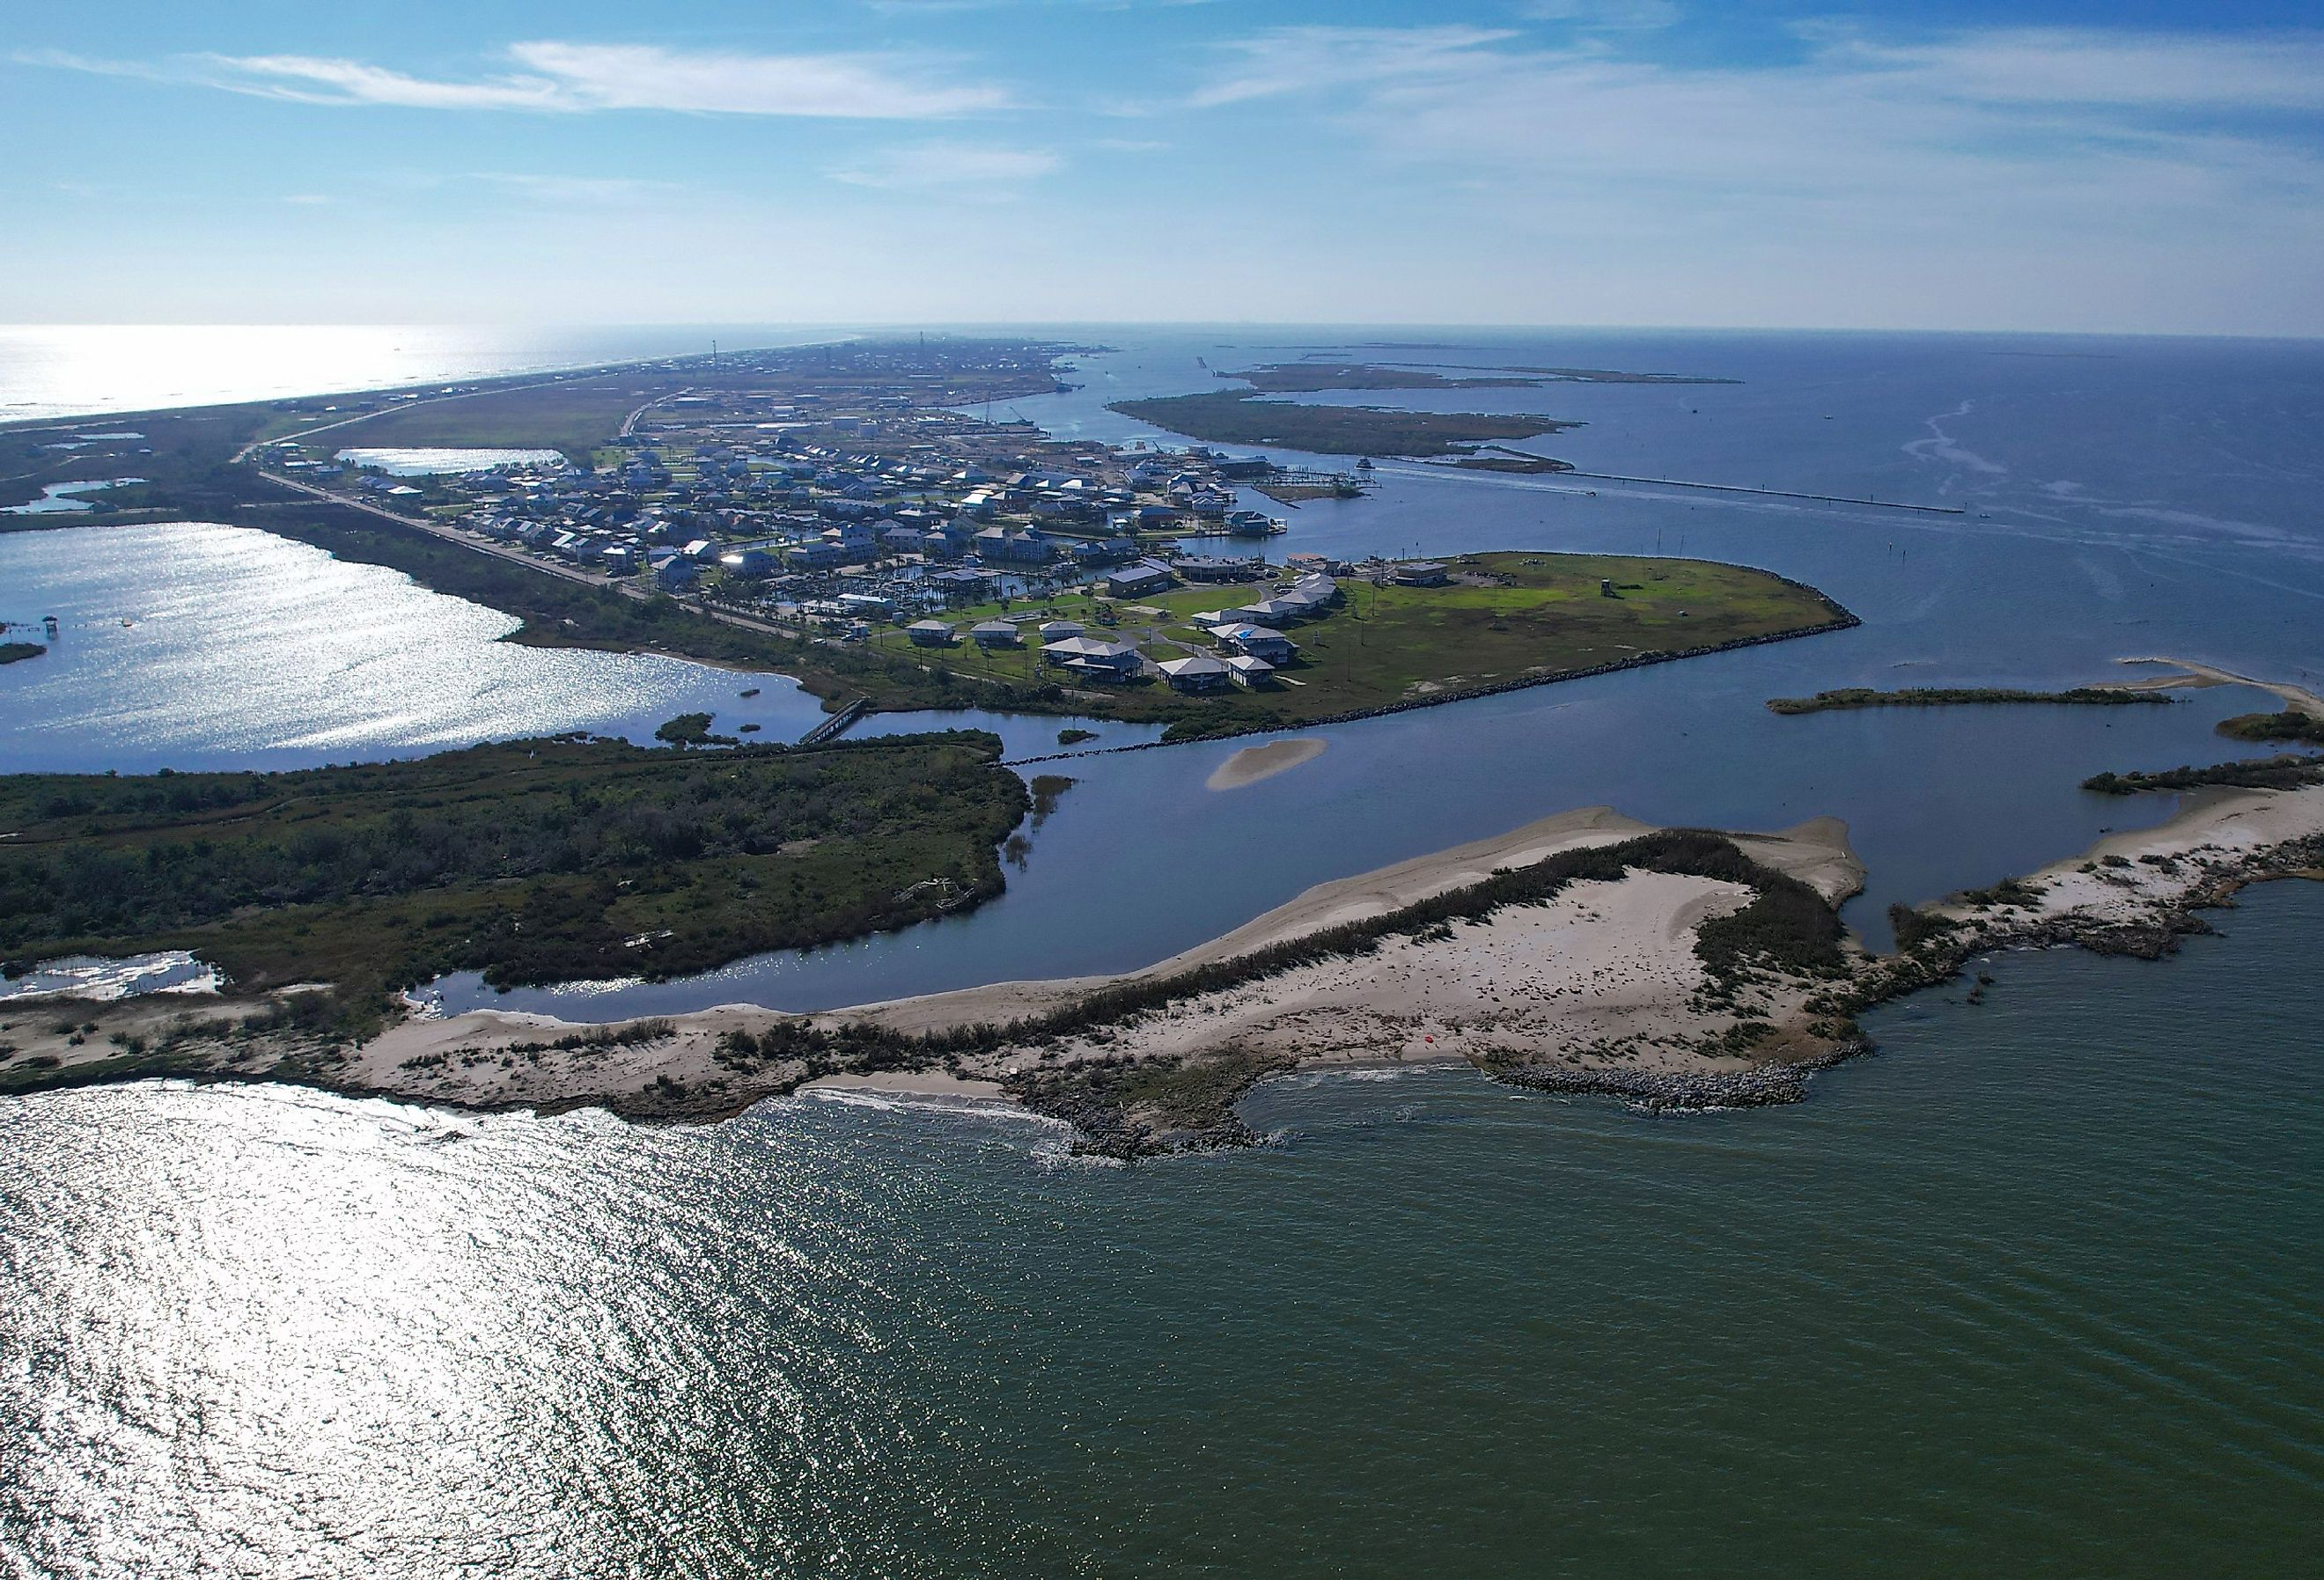 Aerial view of Grand Isle, Louisiana.